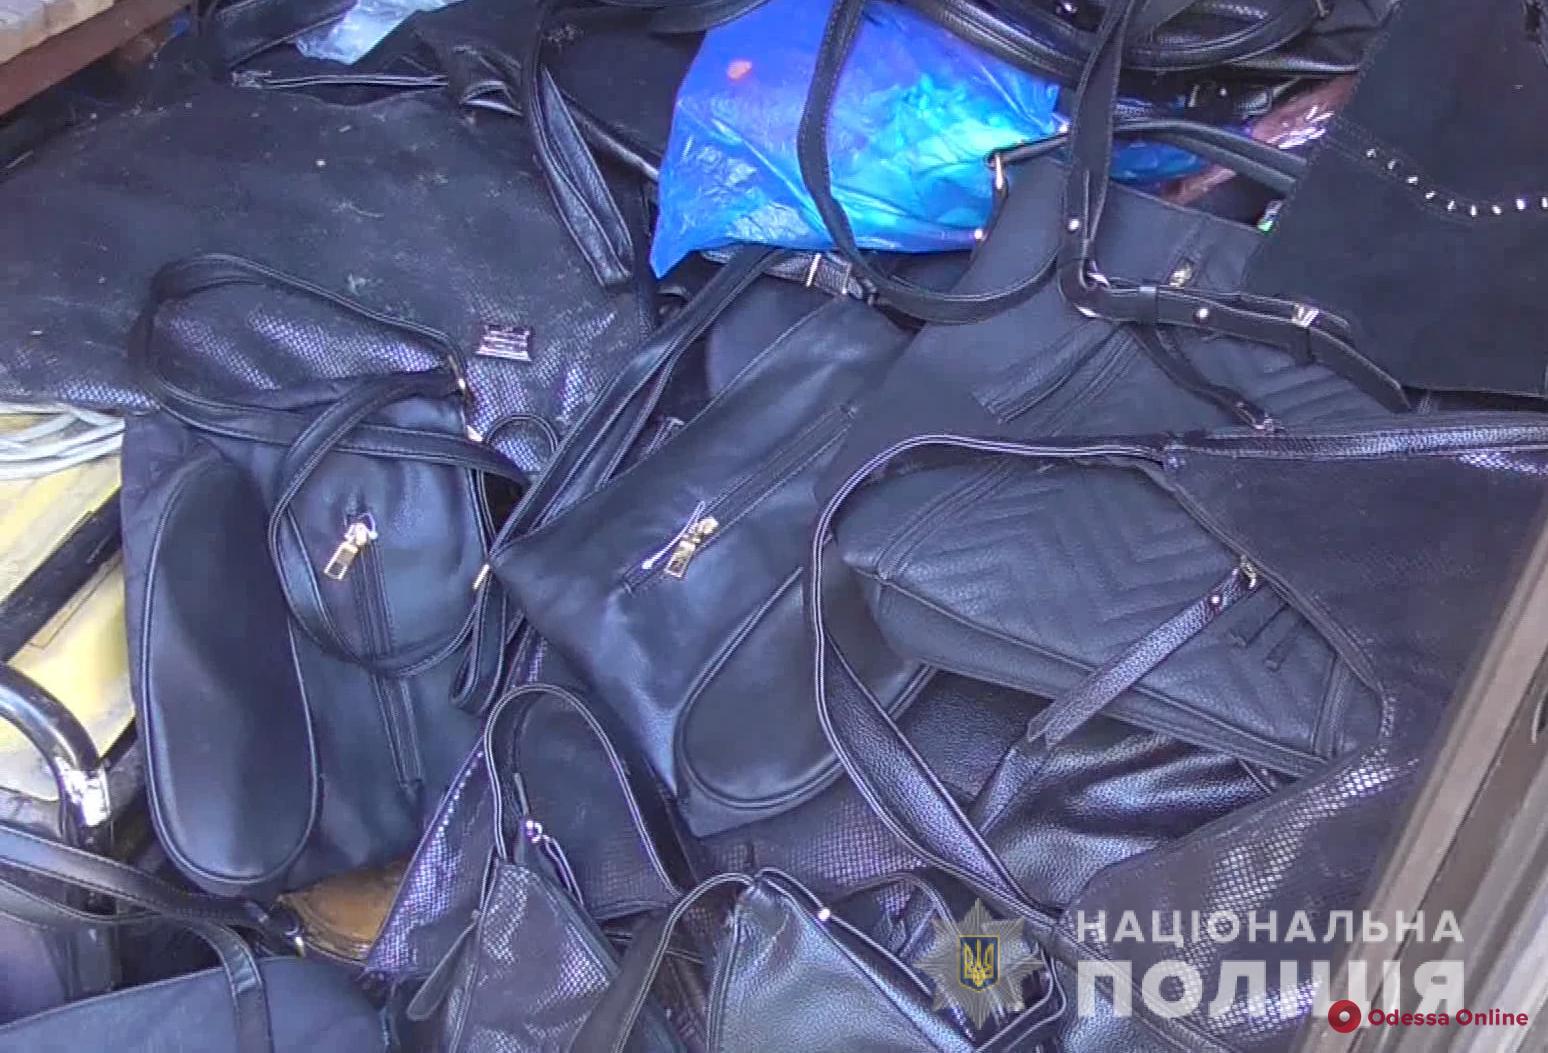 Крали сумки и рюкзаки на рынке: в Одессе обезвредили преступную группировку